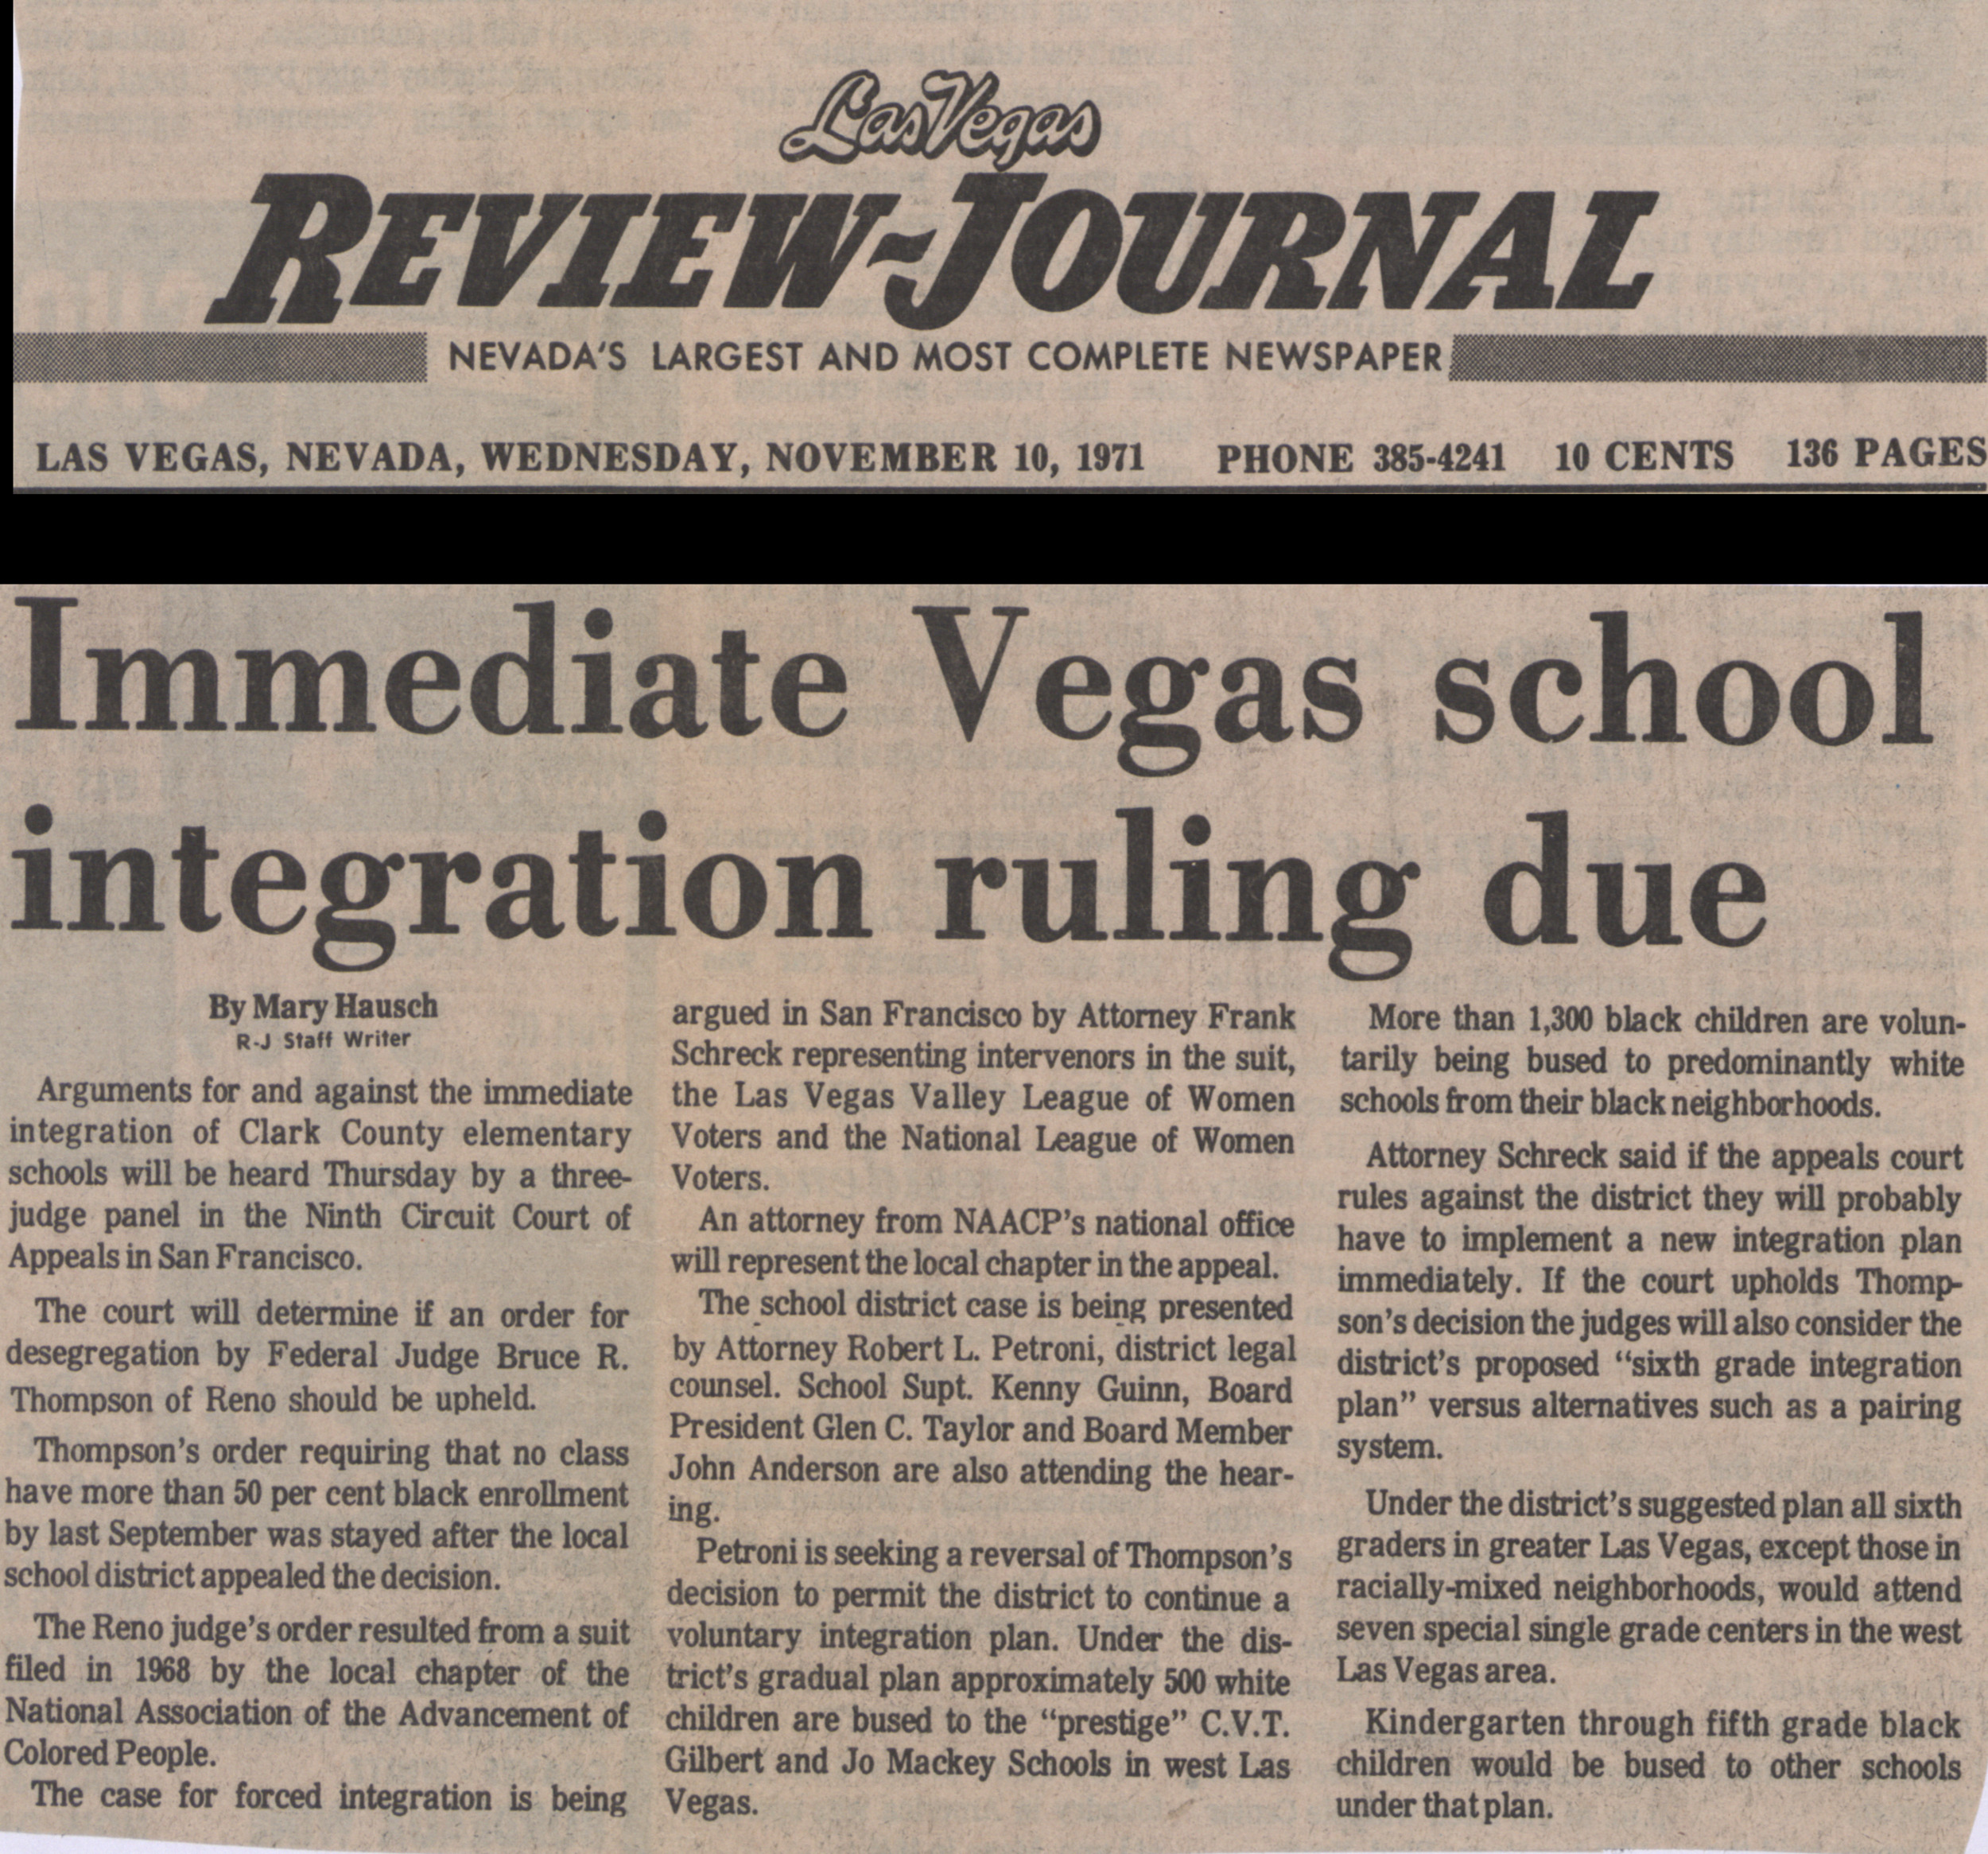 Newspaper clipping, Immediate Vegas school integration ruling due, Las Vegas Review-Journal, November 10, 1971